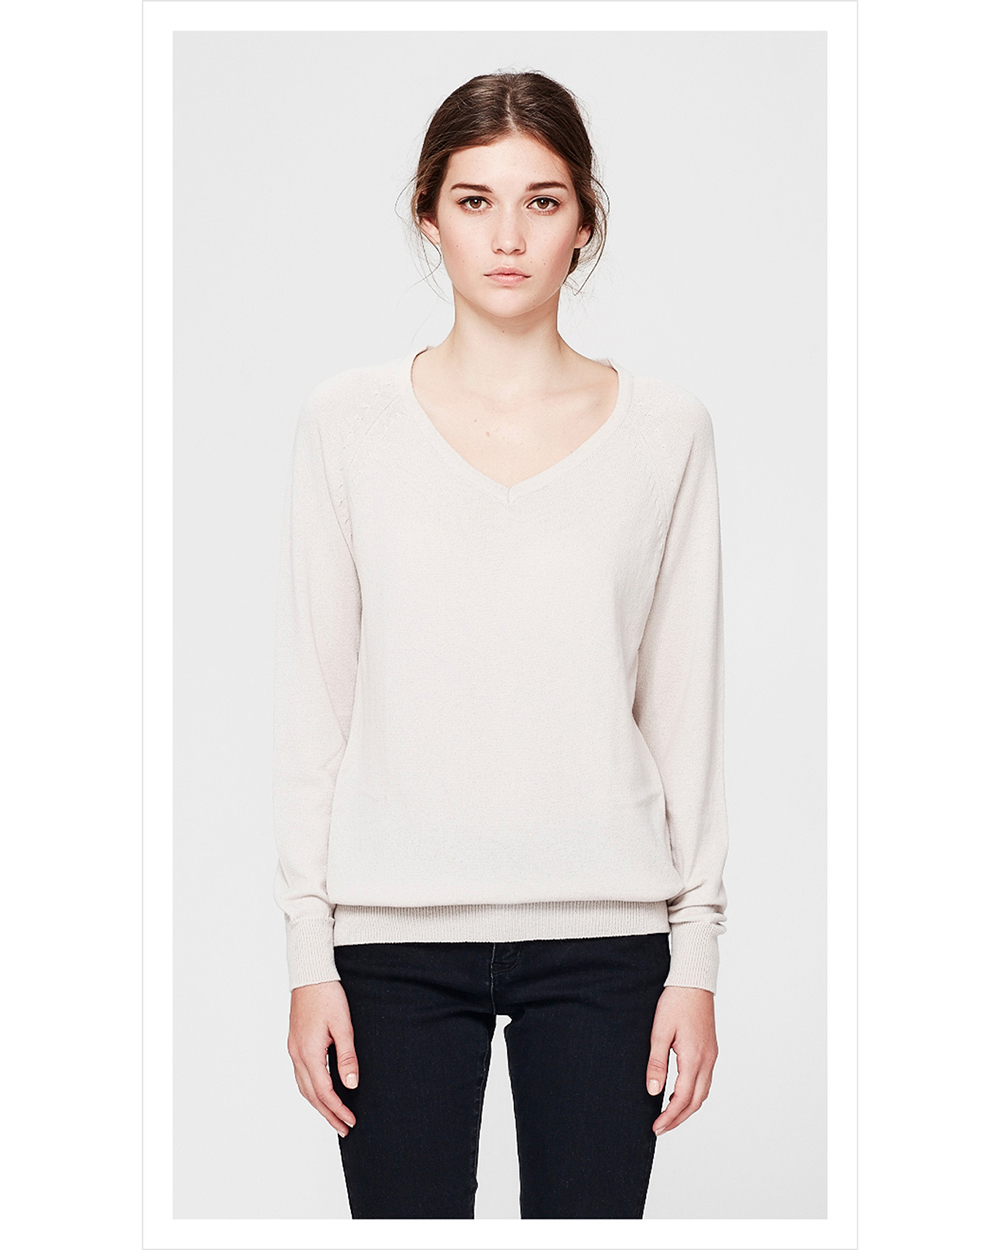 Juliette Hogan Cashmere sweater, $499